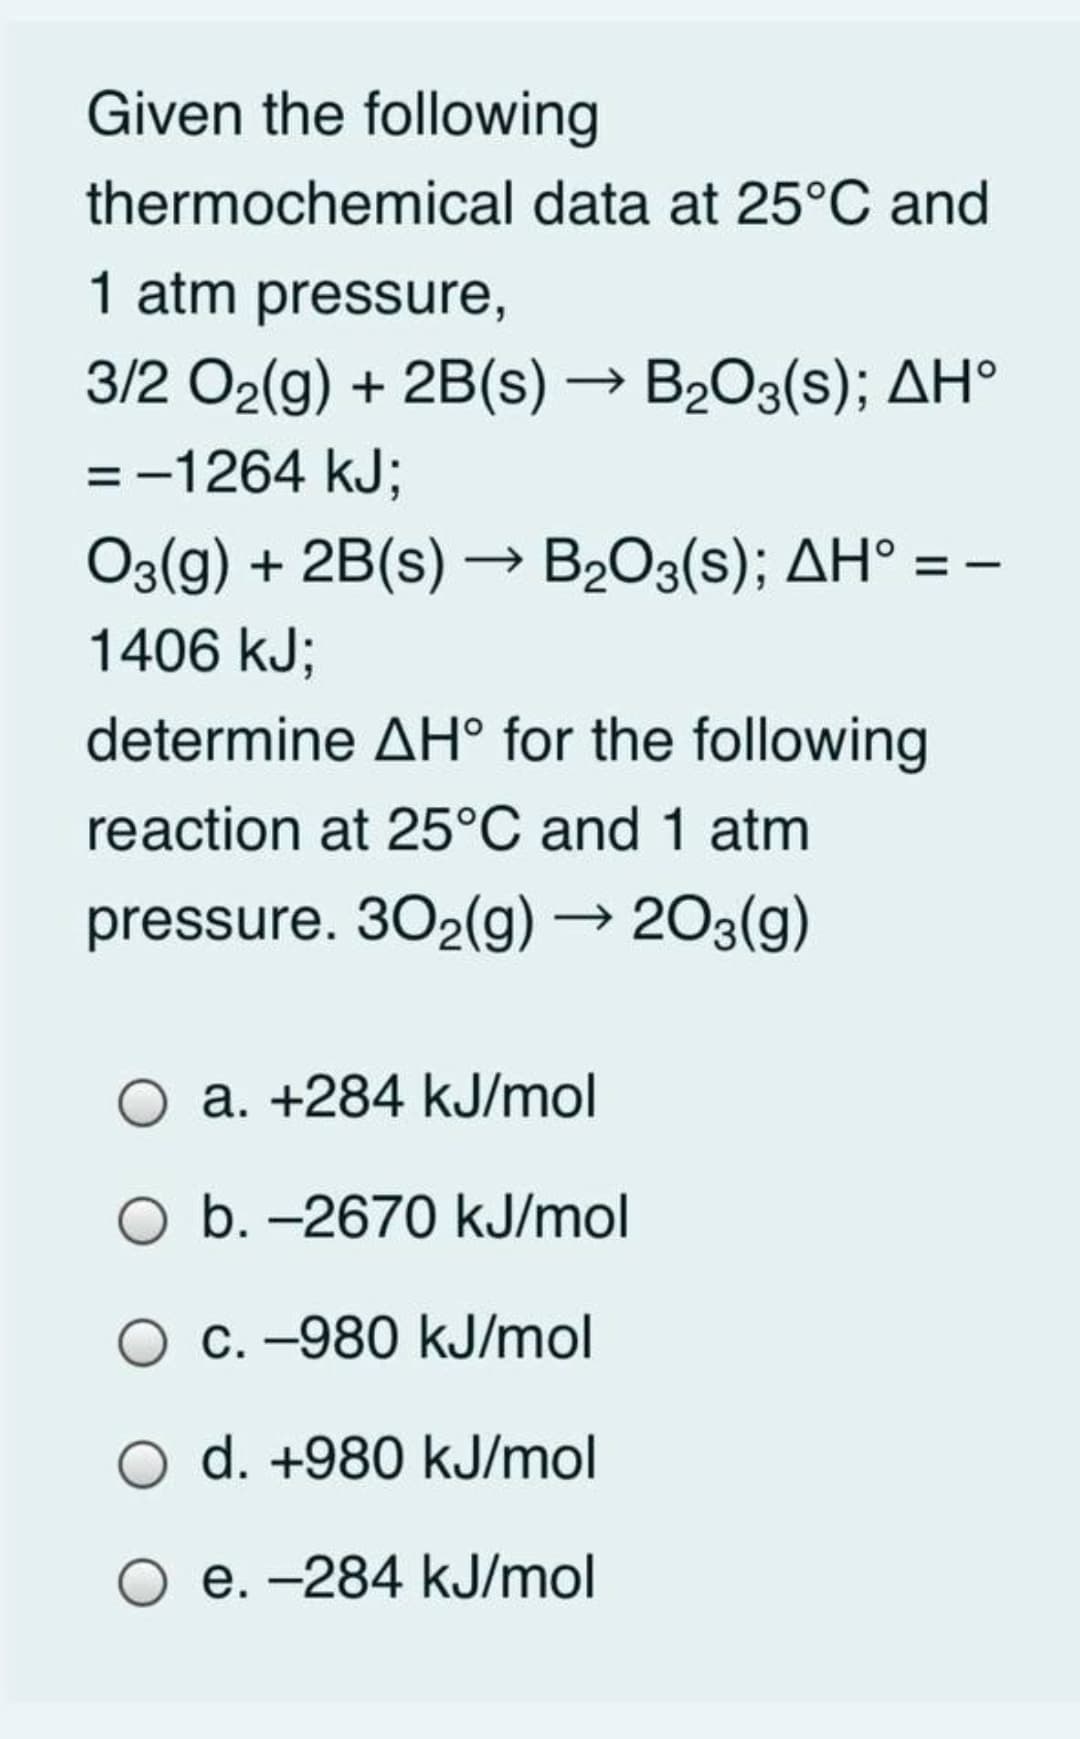 Given the following
thermochemical data at 25°C and
1 atm pressure,
3/2 O2(g) + 2B(s) → B2O3(s); AH°
=-1264 kJ;
O3(g) + 2B(s) –→ B2O3(s); AH° = -
1406 kJ;
determine AH° for the following
reaction at 25°C and 1 atm
pressure. 302(g) → 203(g)
a. +284 kJ/mol
b. -2670 kJ/mol
C. -980 kJ/mol
d. +980 kJ/mol
O e. -284 kJ/mol
